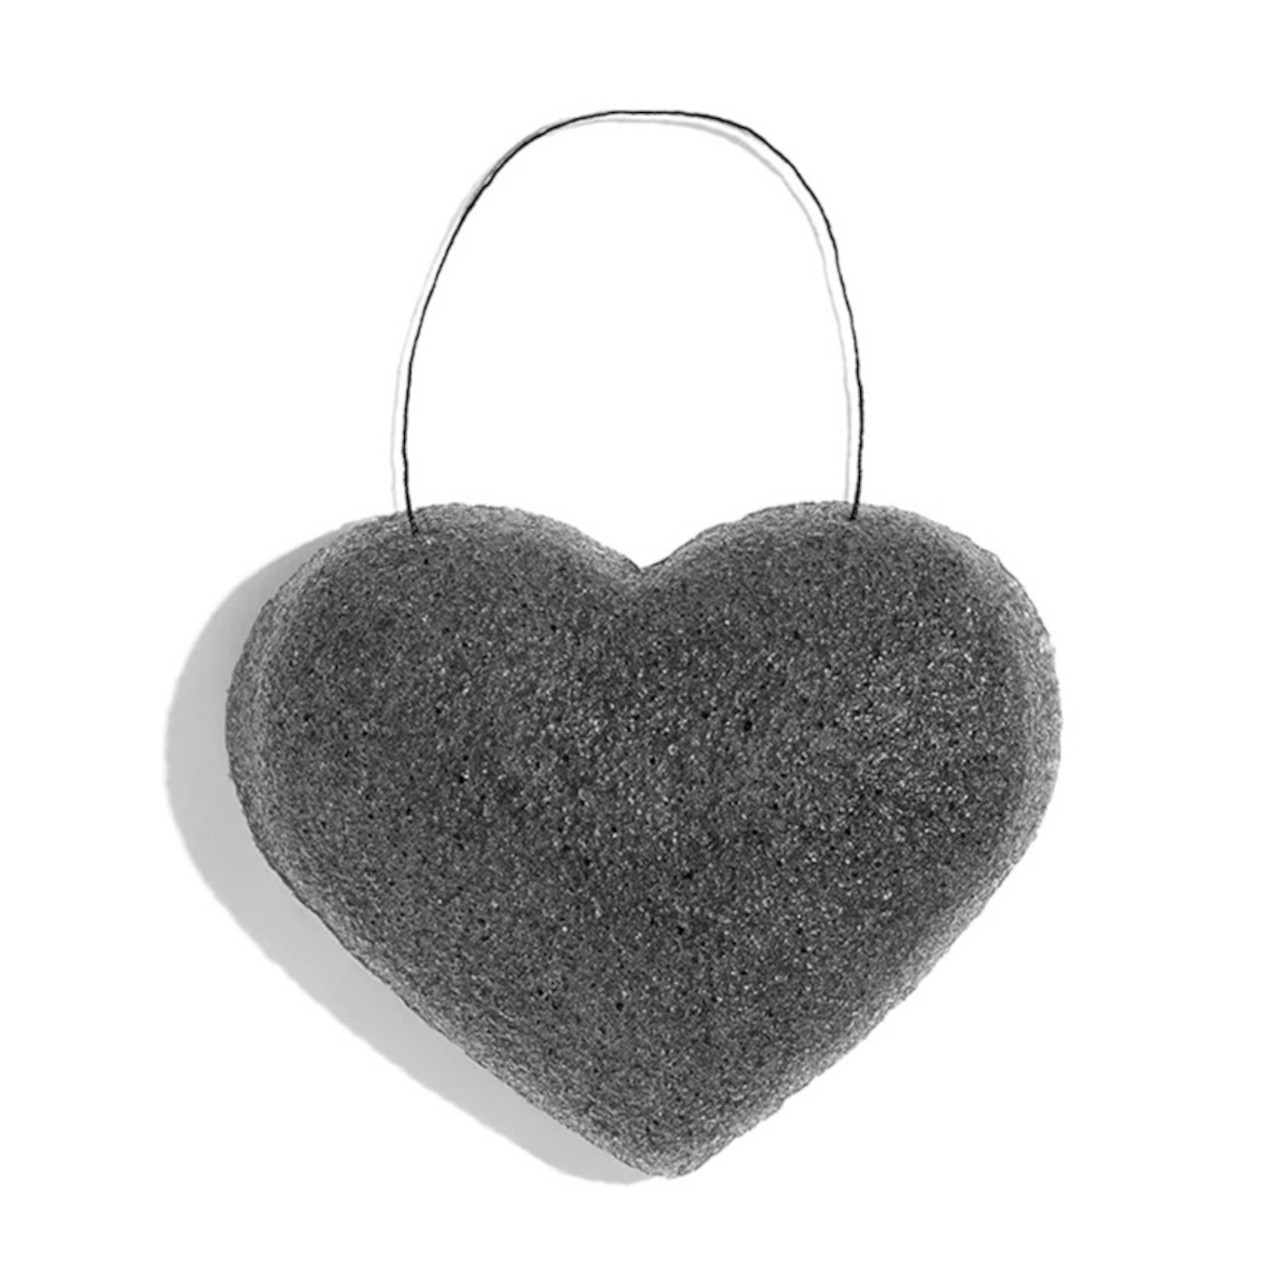 One Love Organics The Cleansing Sponge - Bamboo Charcoal Heart